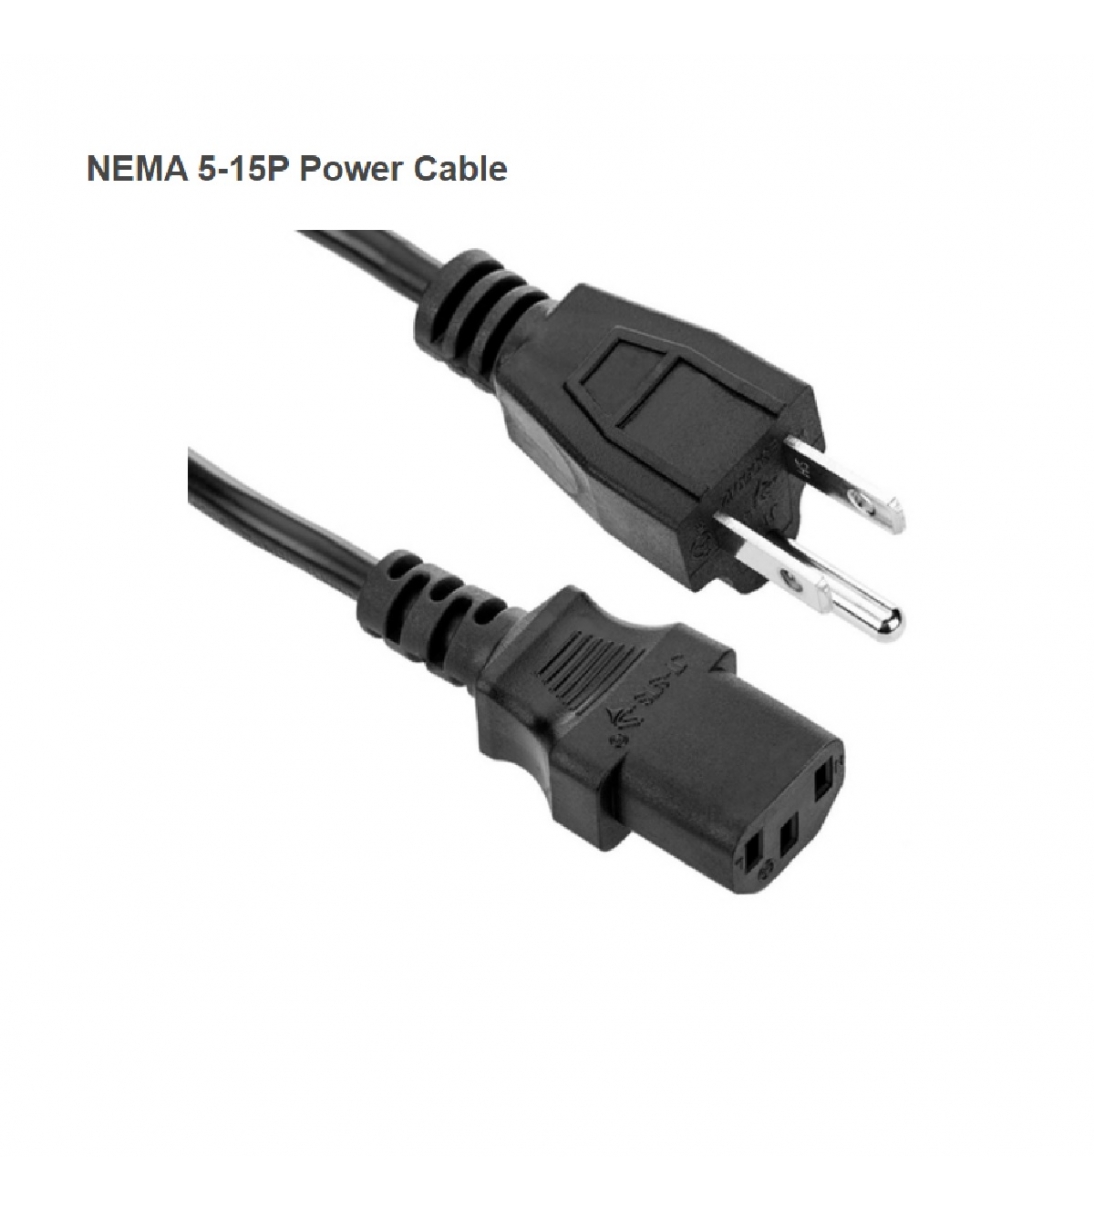 NEMA 5-15P Power Cable